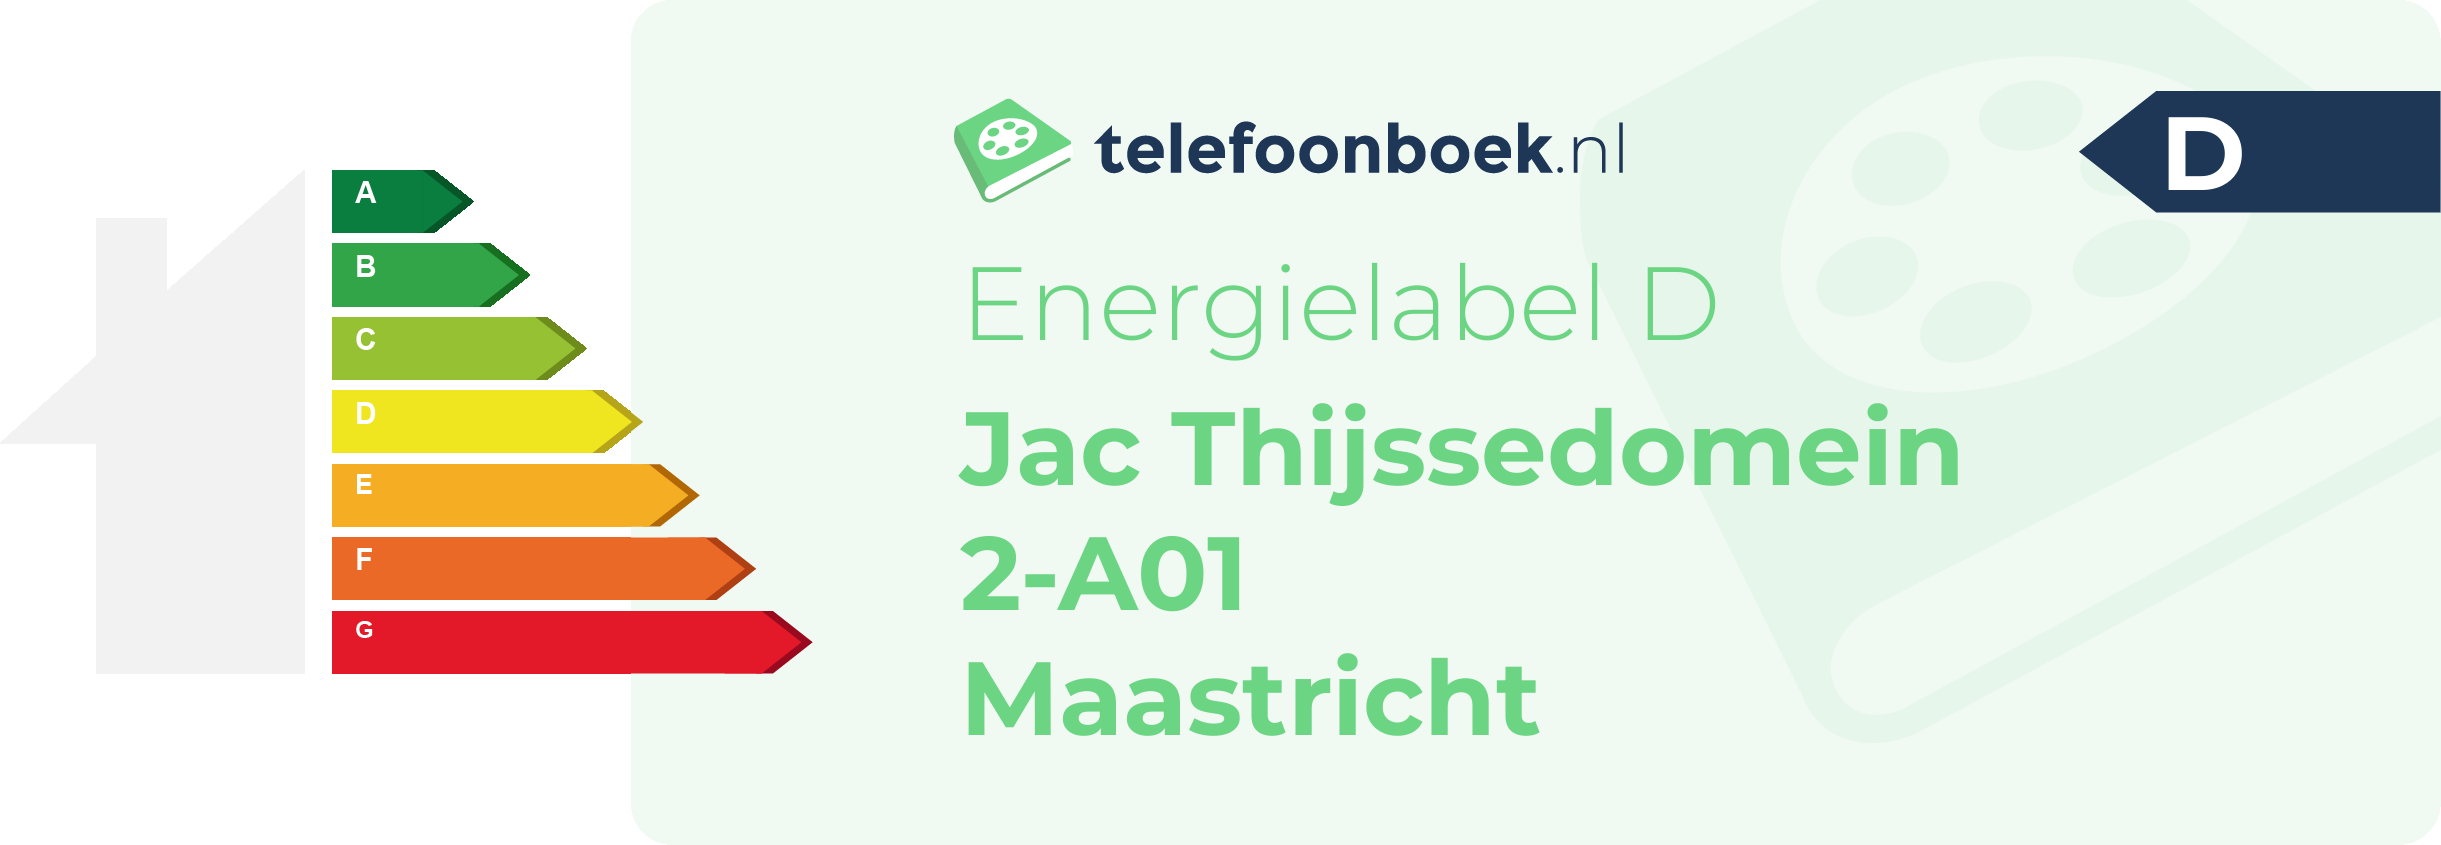 Energielabel Jac Thijssedomein 2-A01 Maastricht